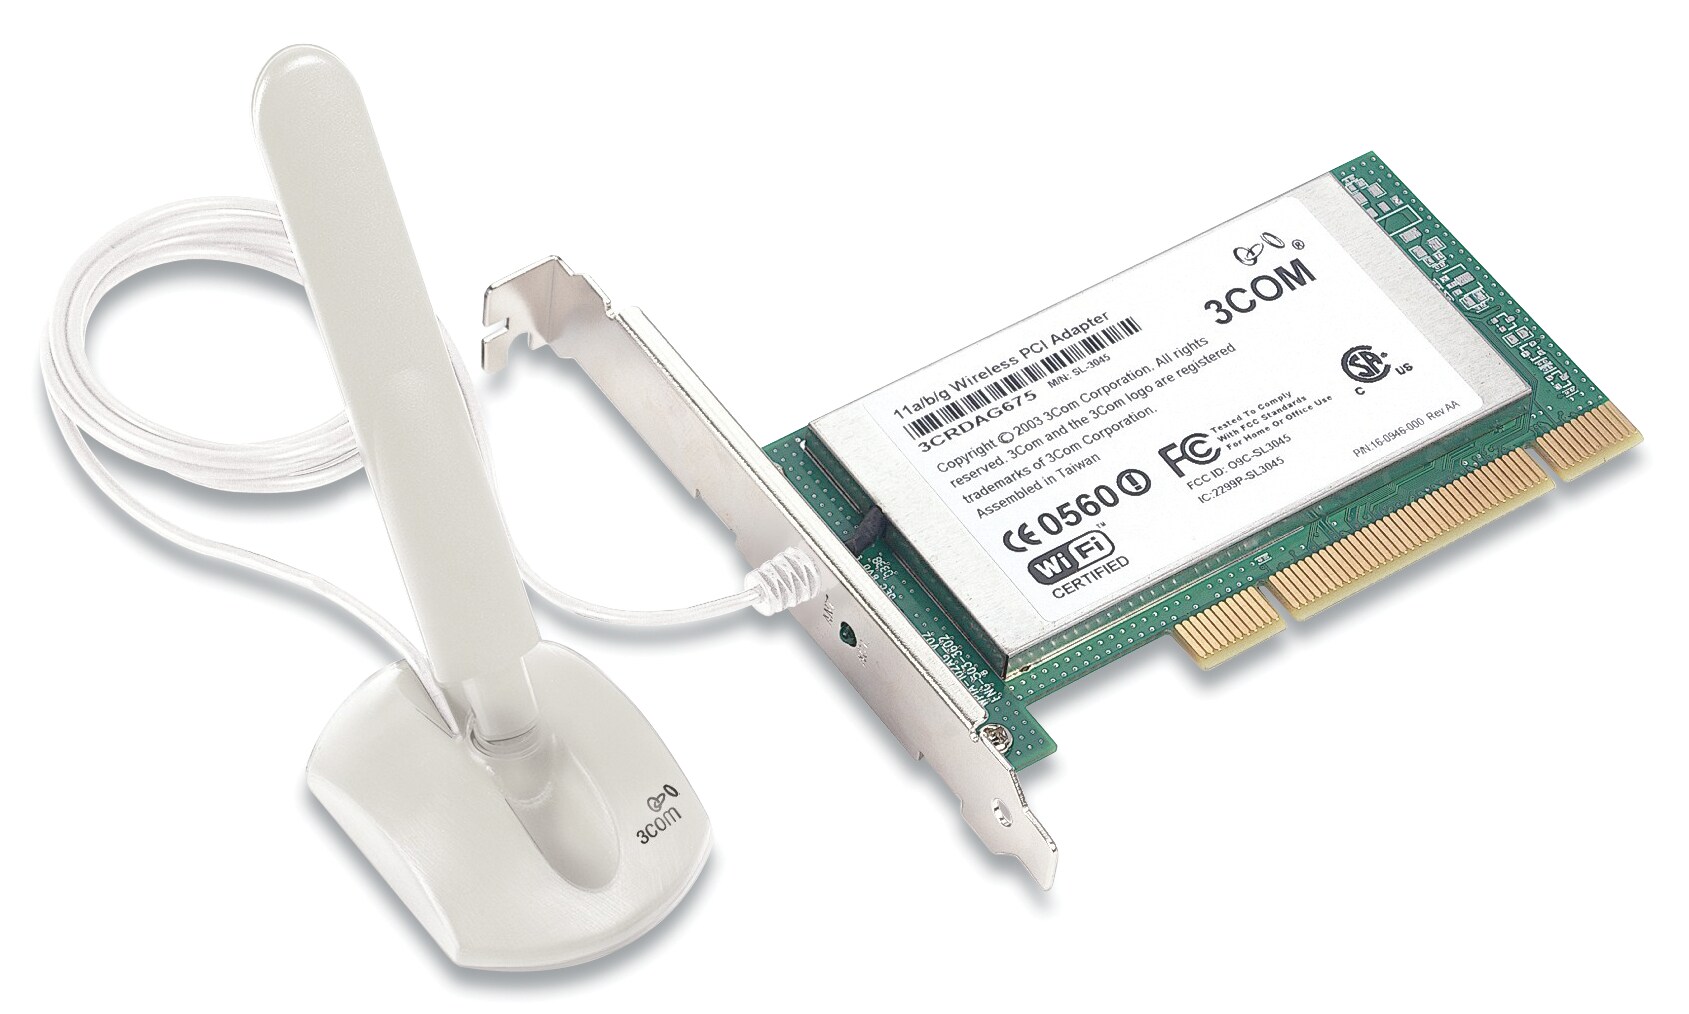 3Com 11a/b/g Wireless PCI Adapter